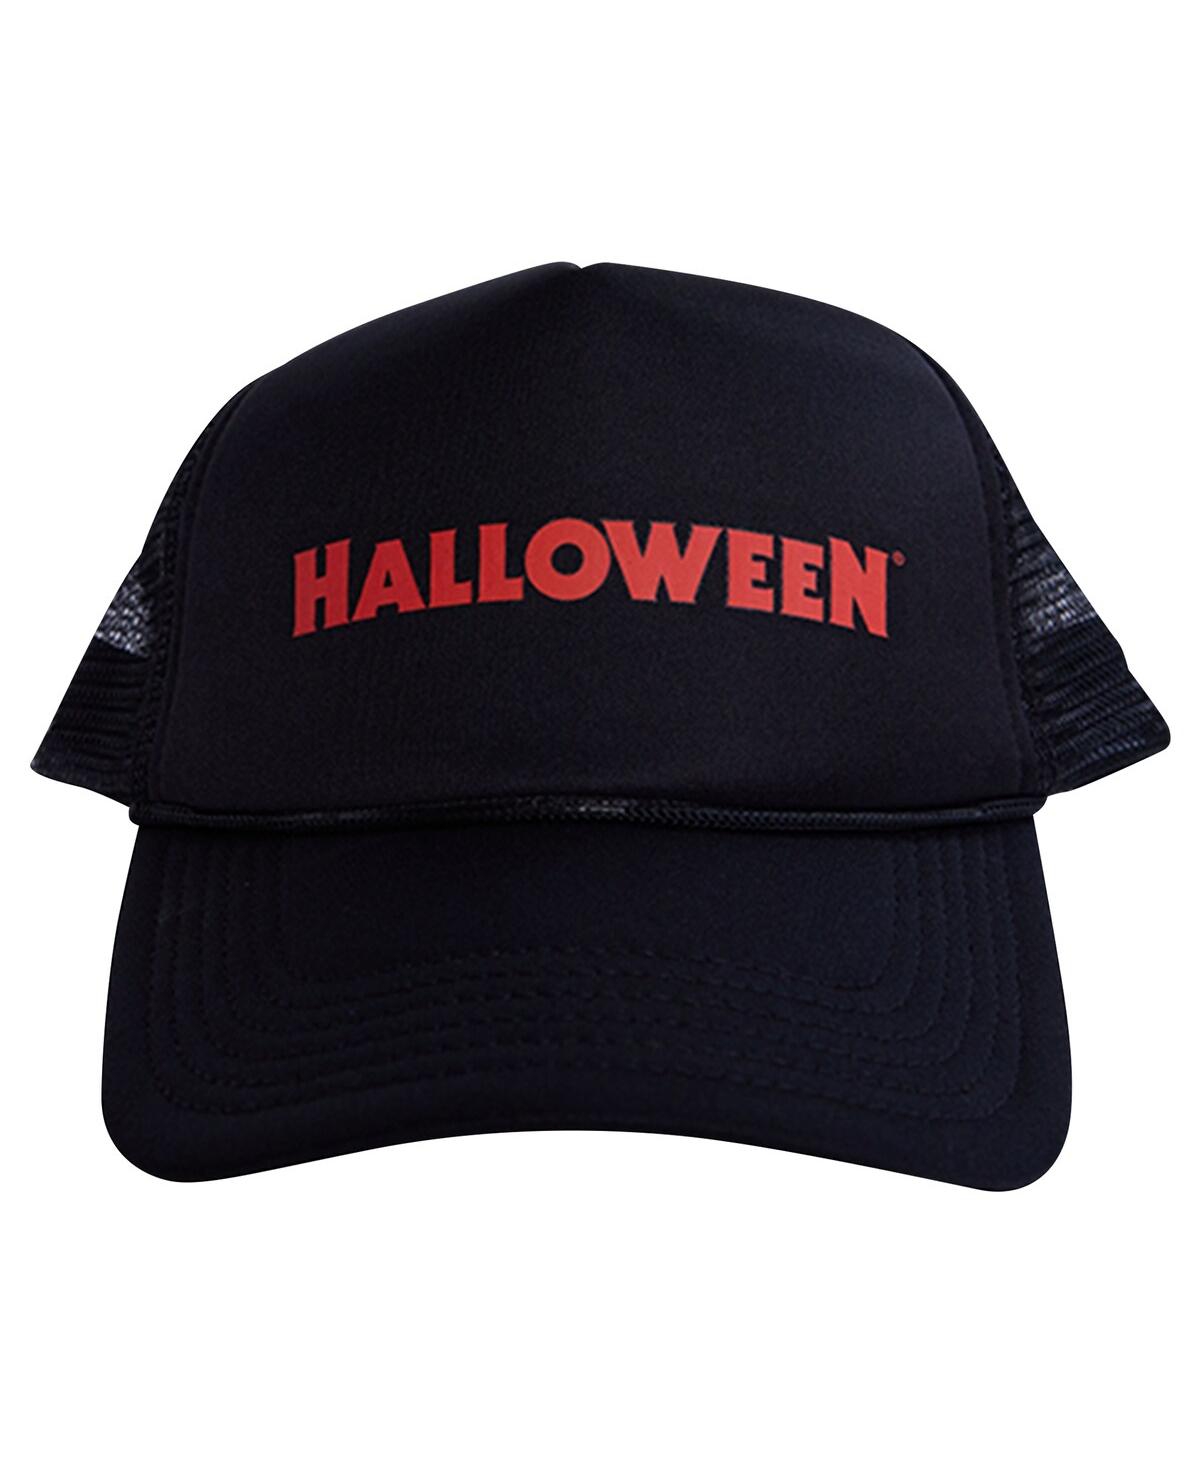 Men's and Women's Contenders Clothing Black Halloween Logo Trucker Hat - Black